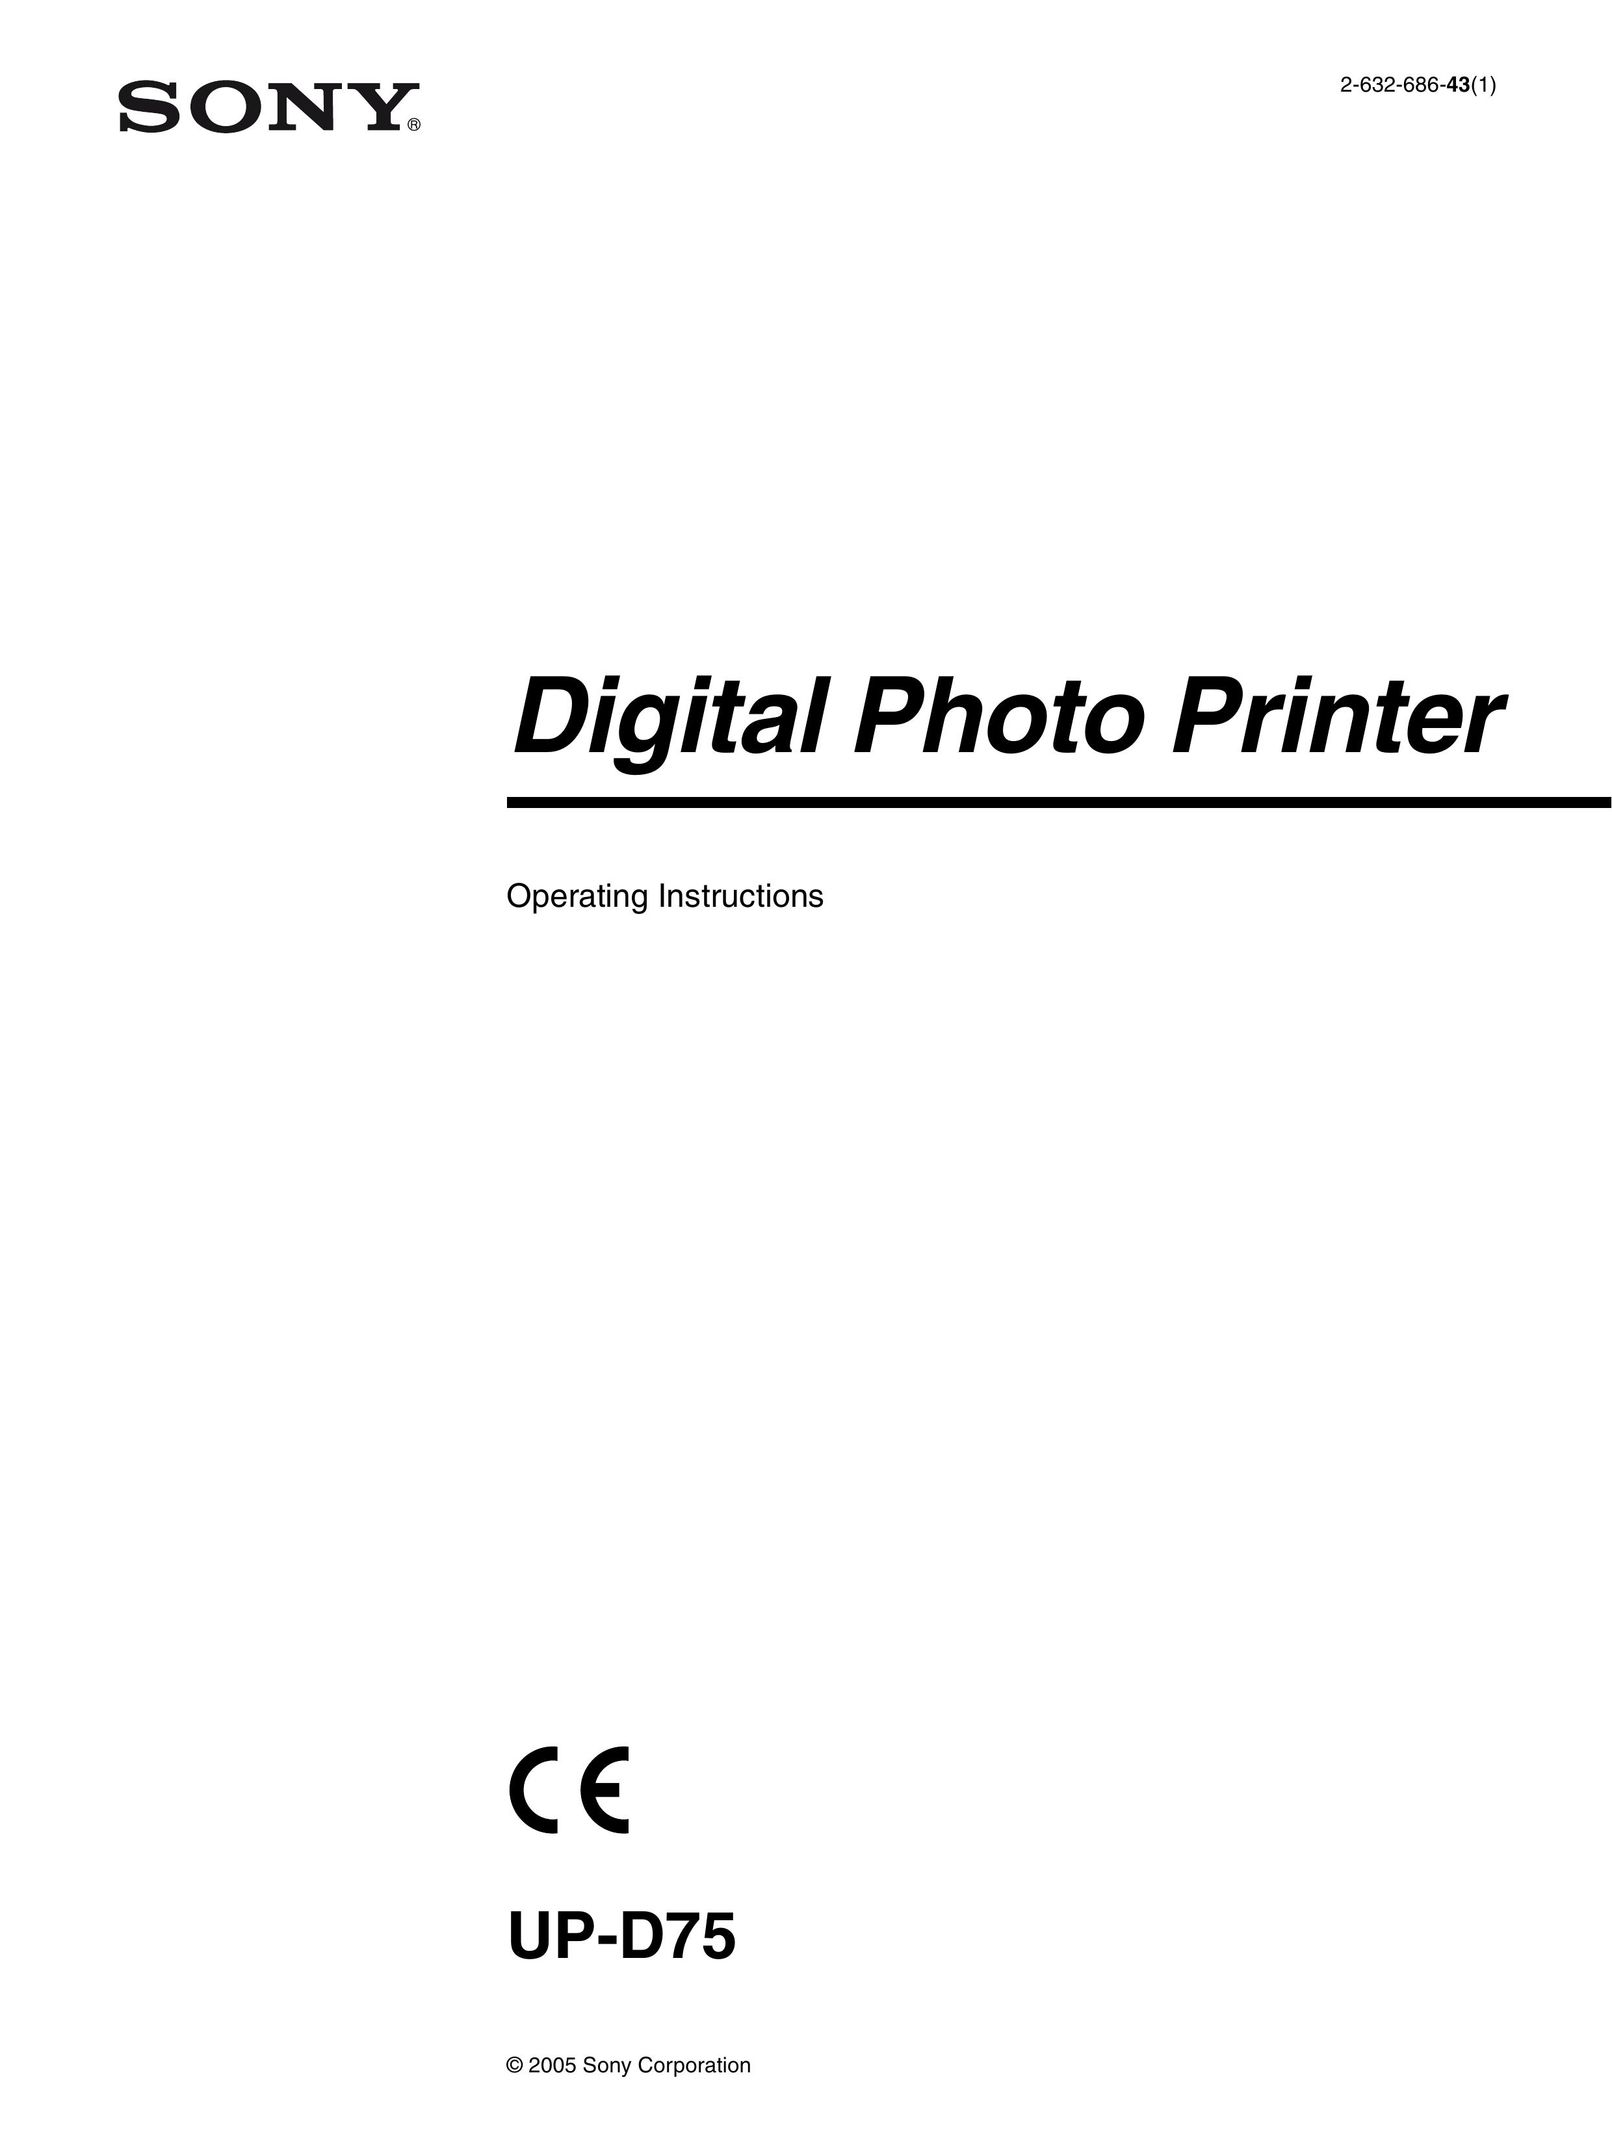 Sony UP-D75 Printer User Manual